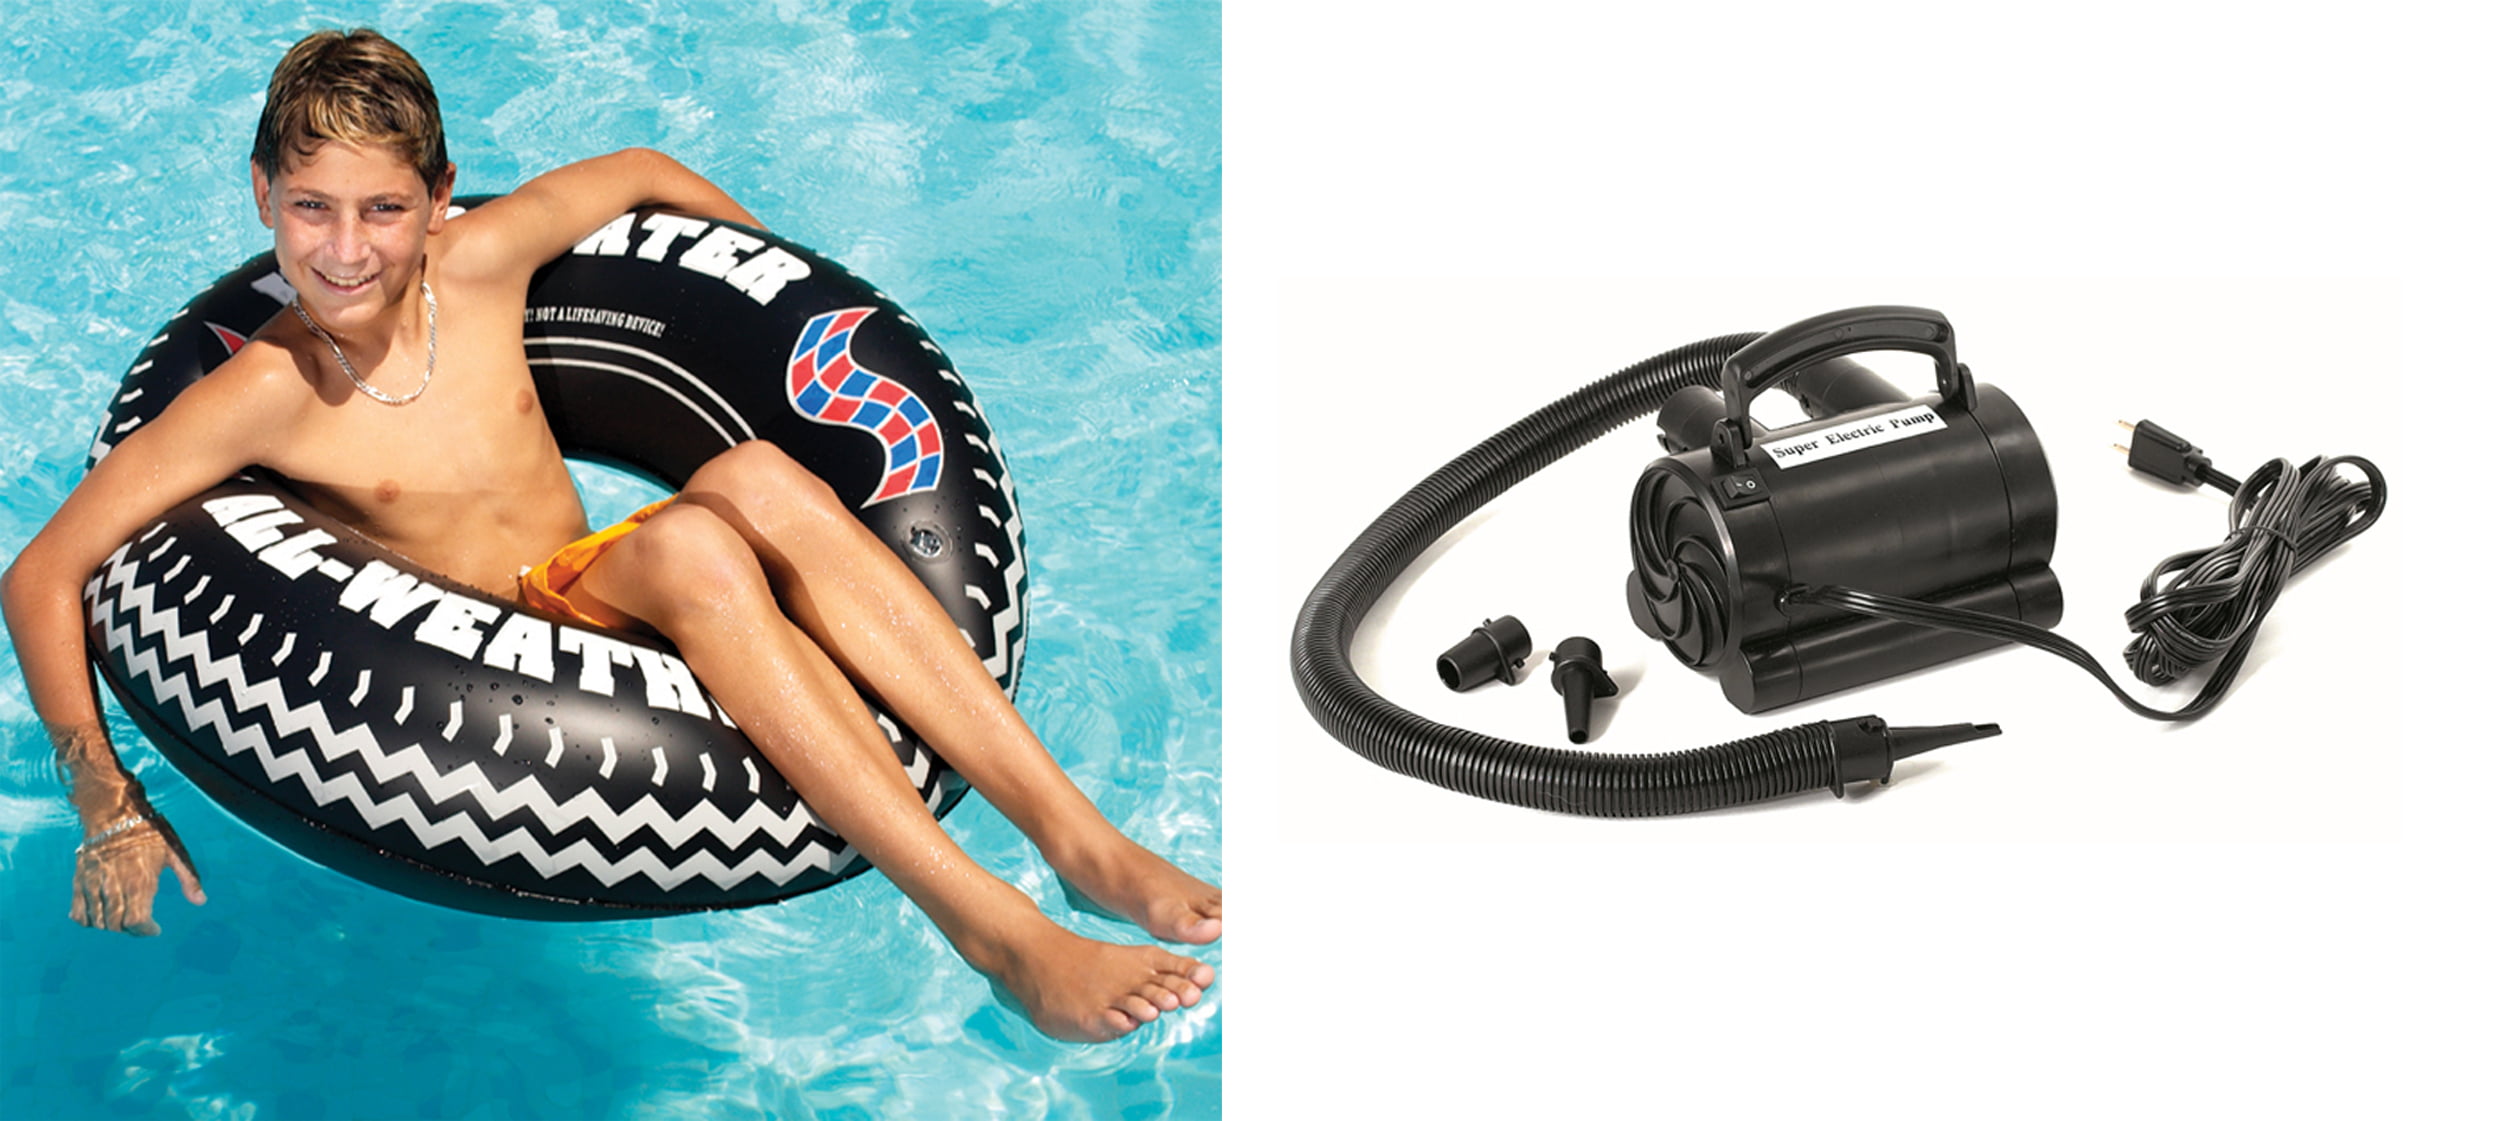 Swimline 36" Inflatable Pool River Lake Floating Black Tire Tube How To Inflate Pool Float With Bike Pump